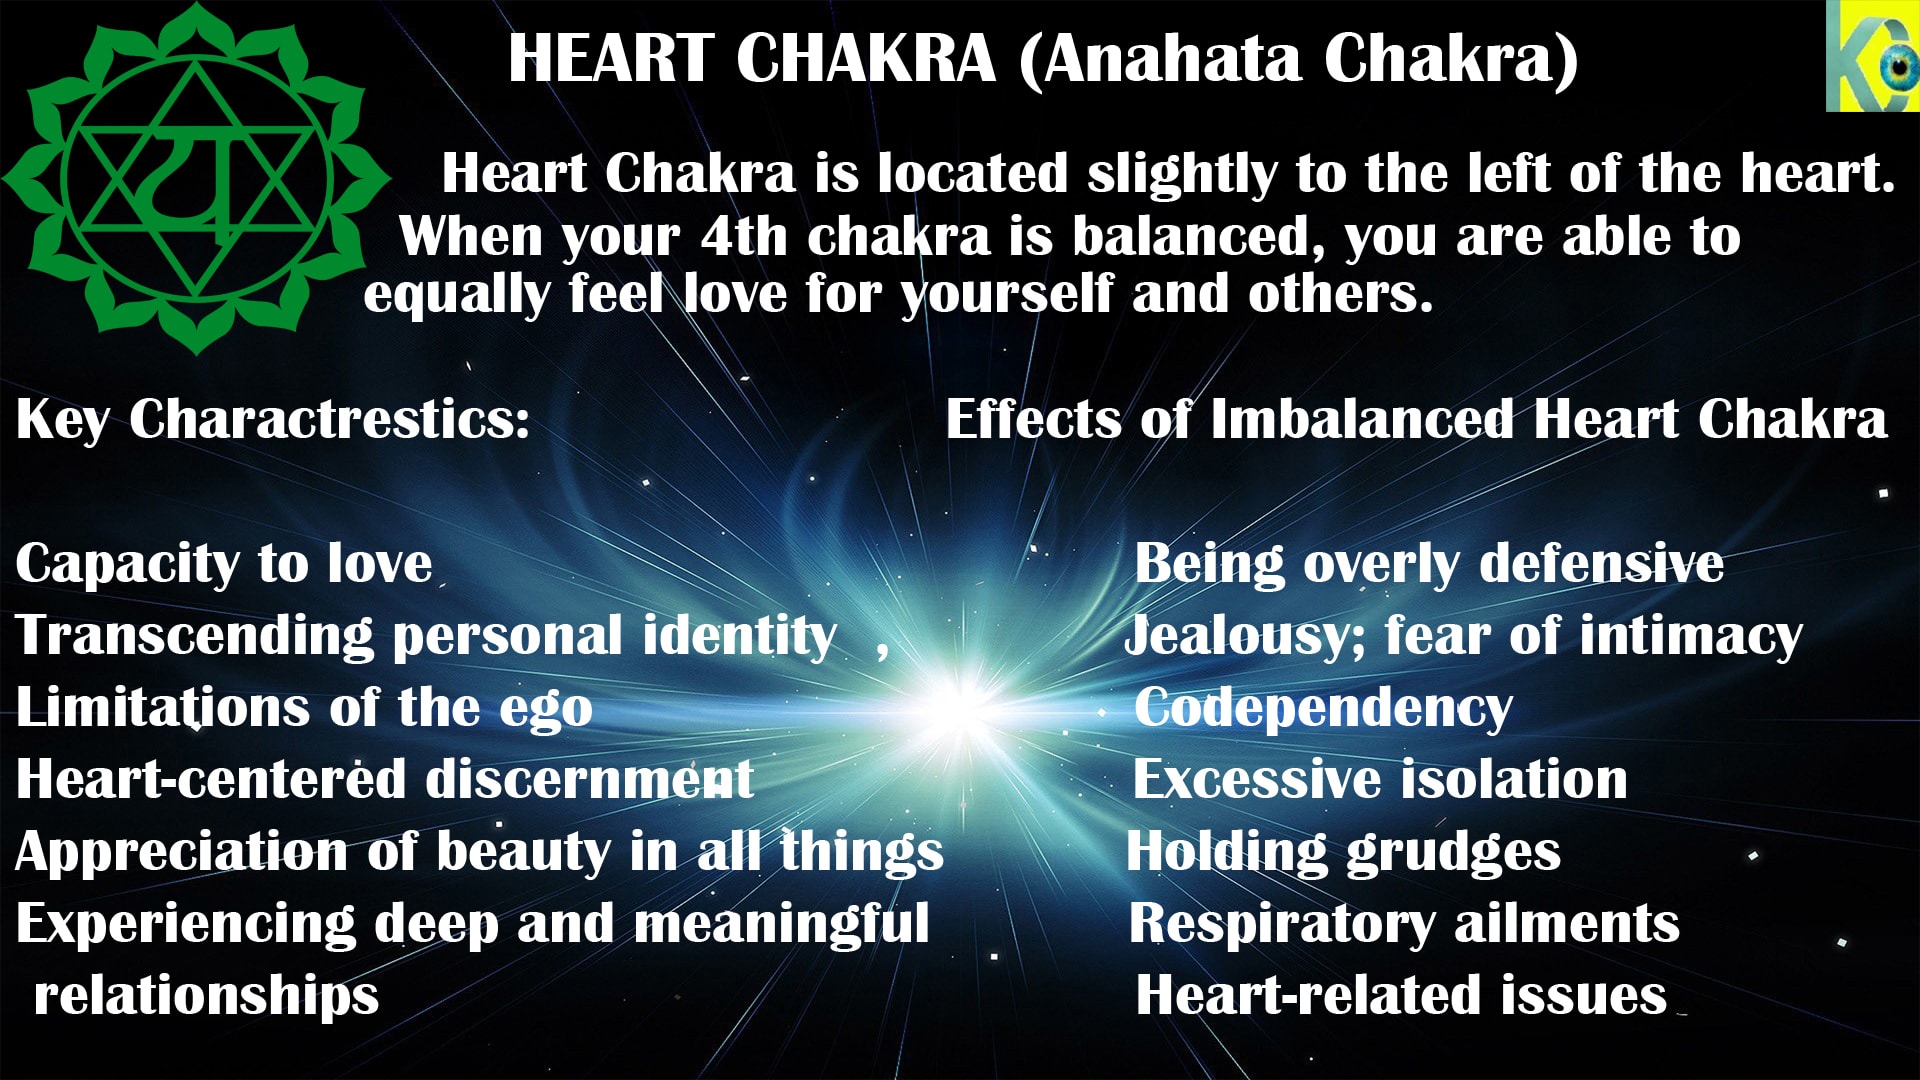 Anahata Chakra (Heart Chakra)